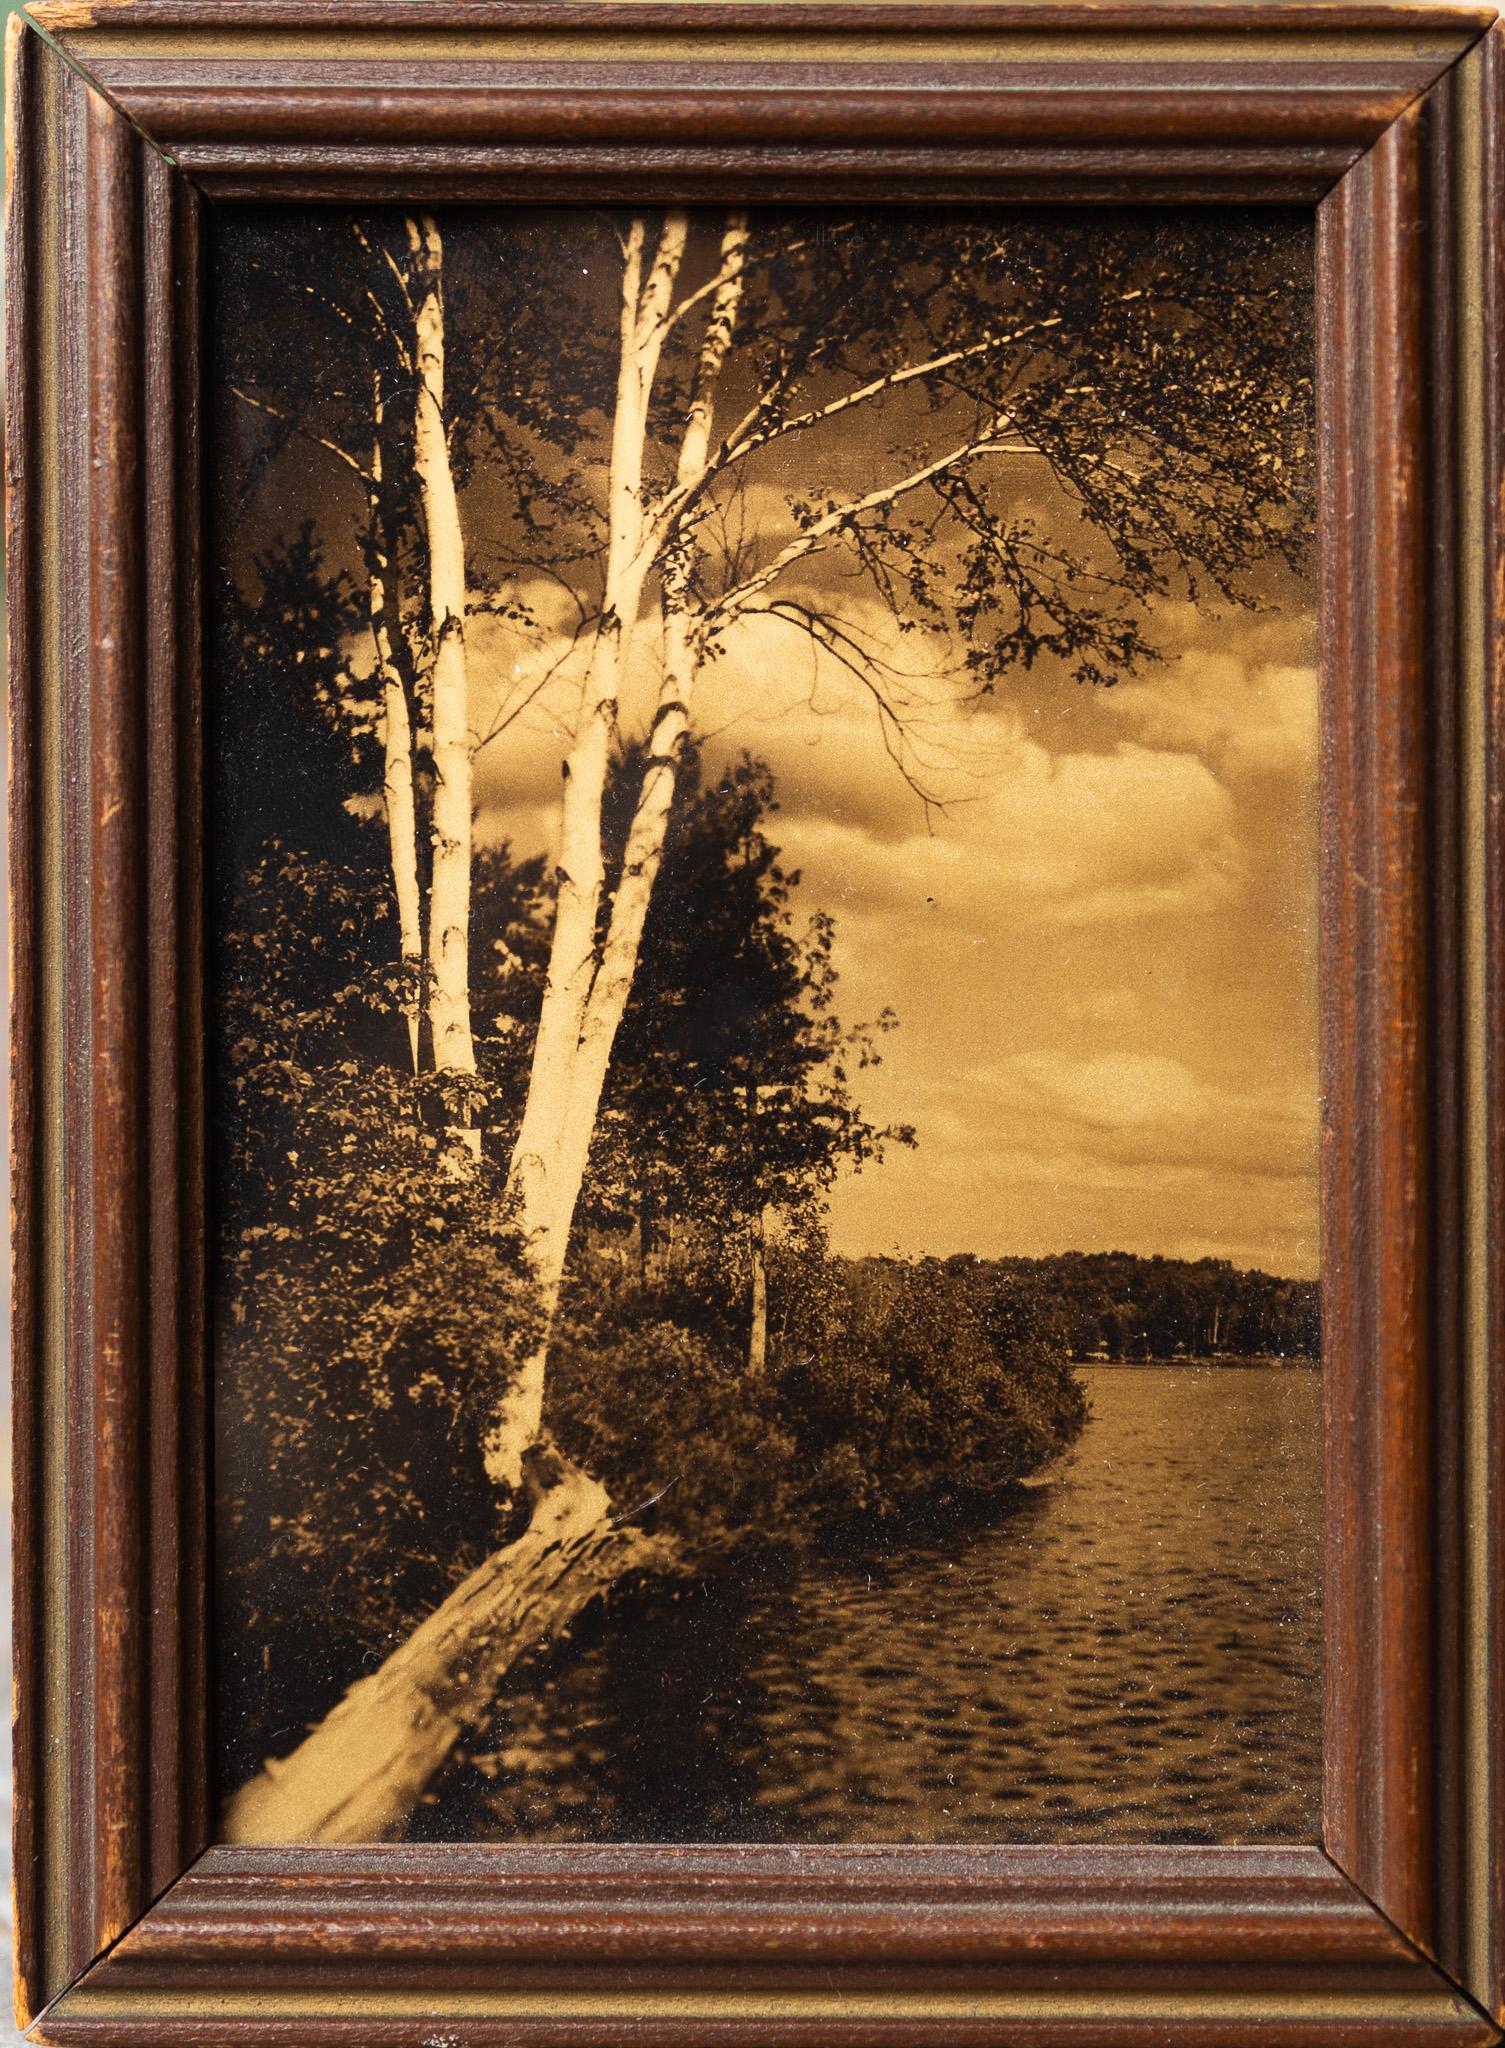 Antique Sepia Landscape Scene on the Lake - Photograph by Herman Schervee